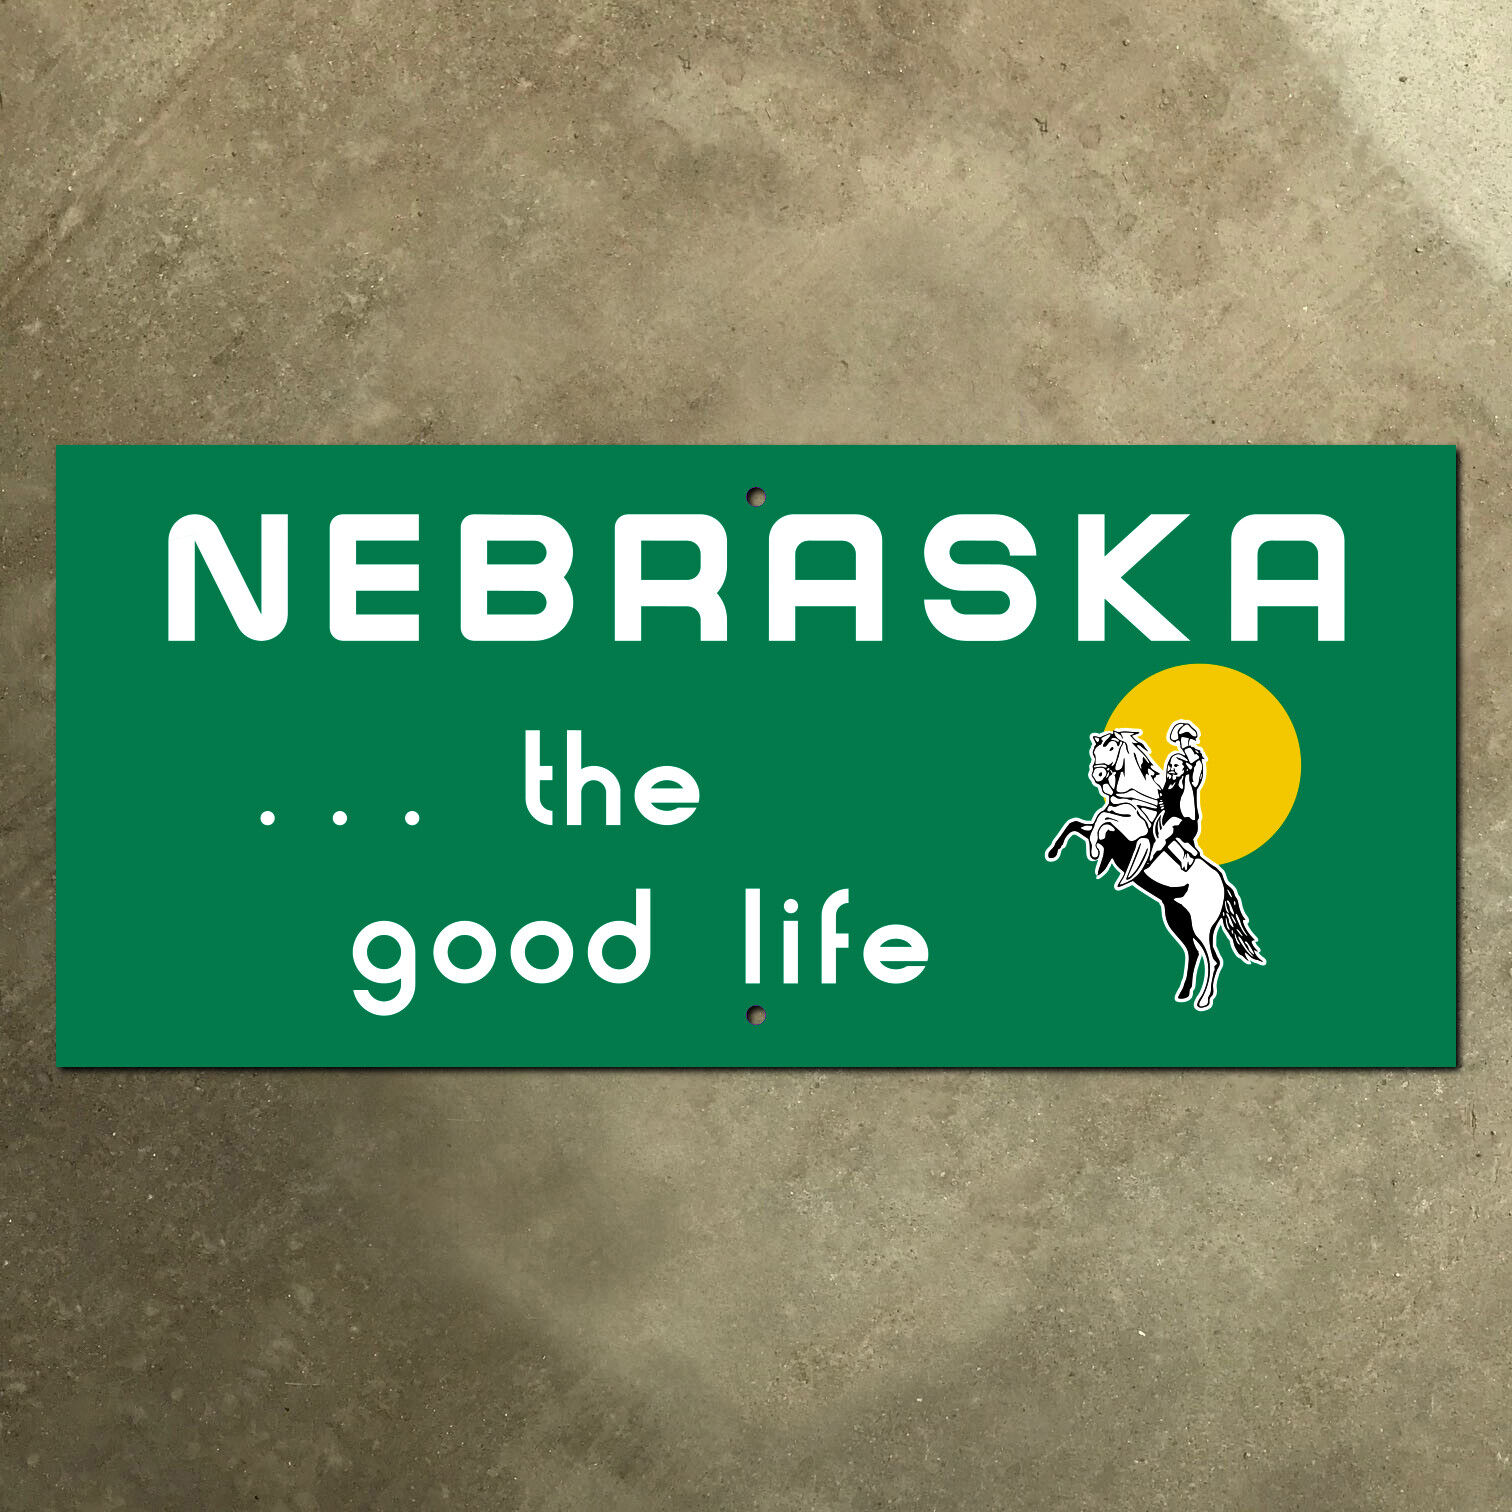 Nebraska state line highway marker road sign 1984 The Good Life cowboy 18x8